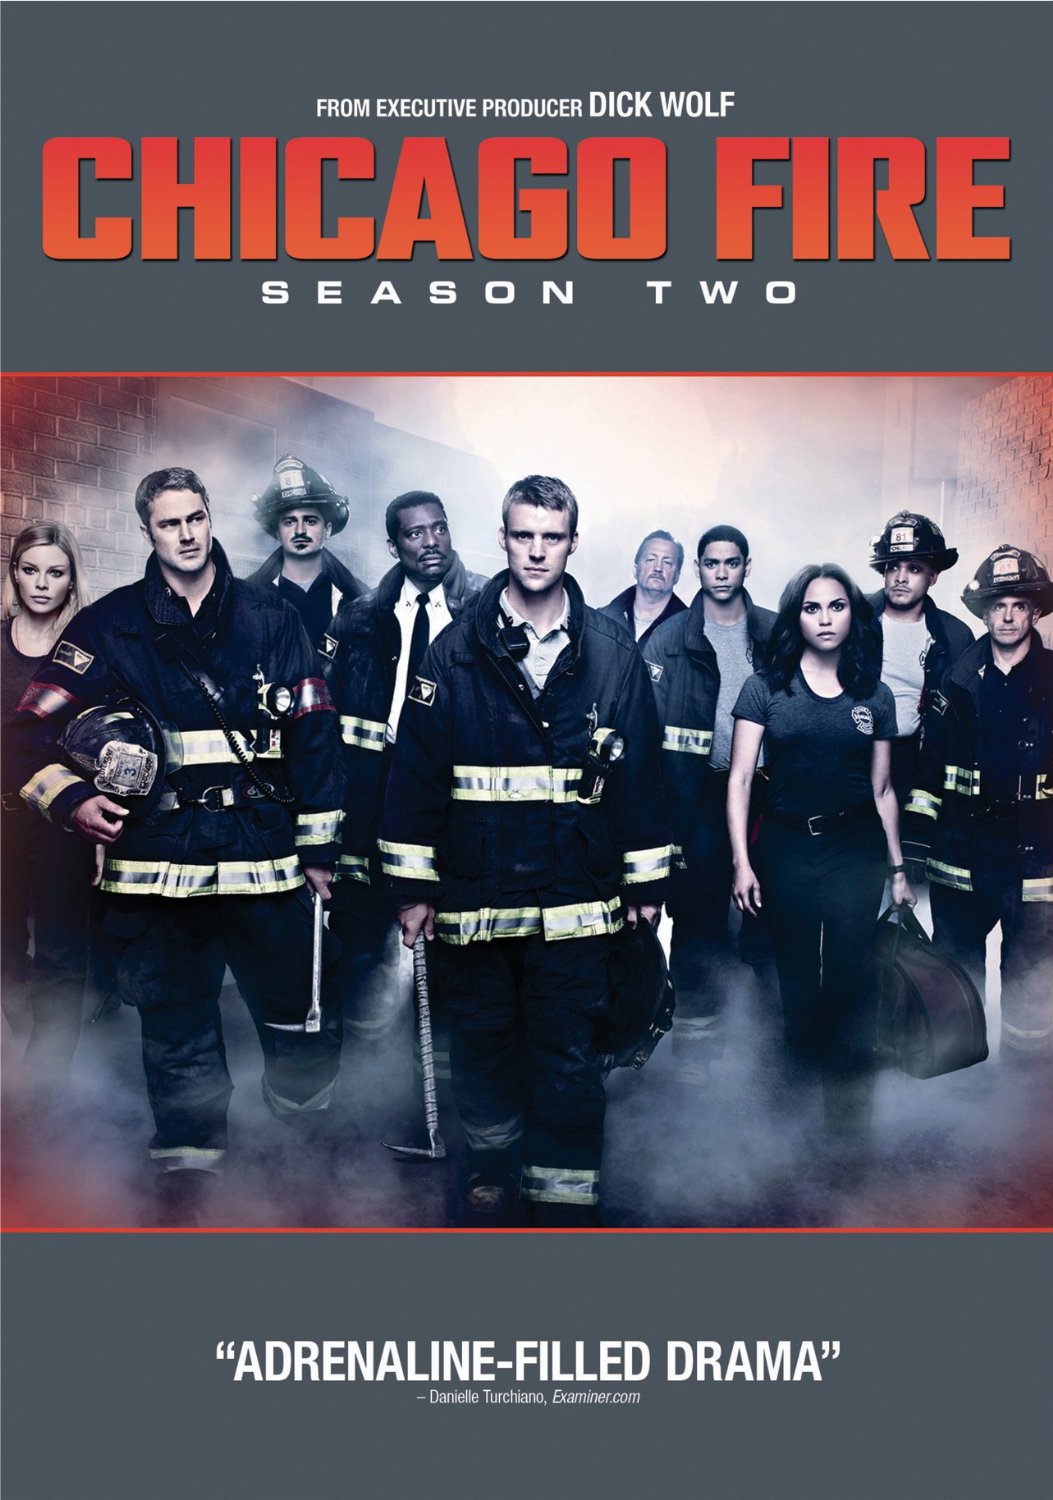 Chicago Fire Season 2 DVD Review